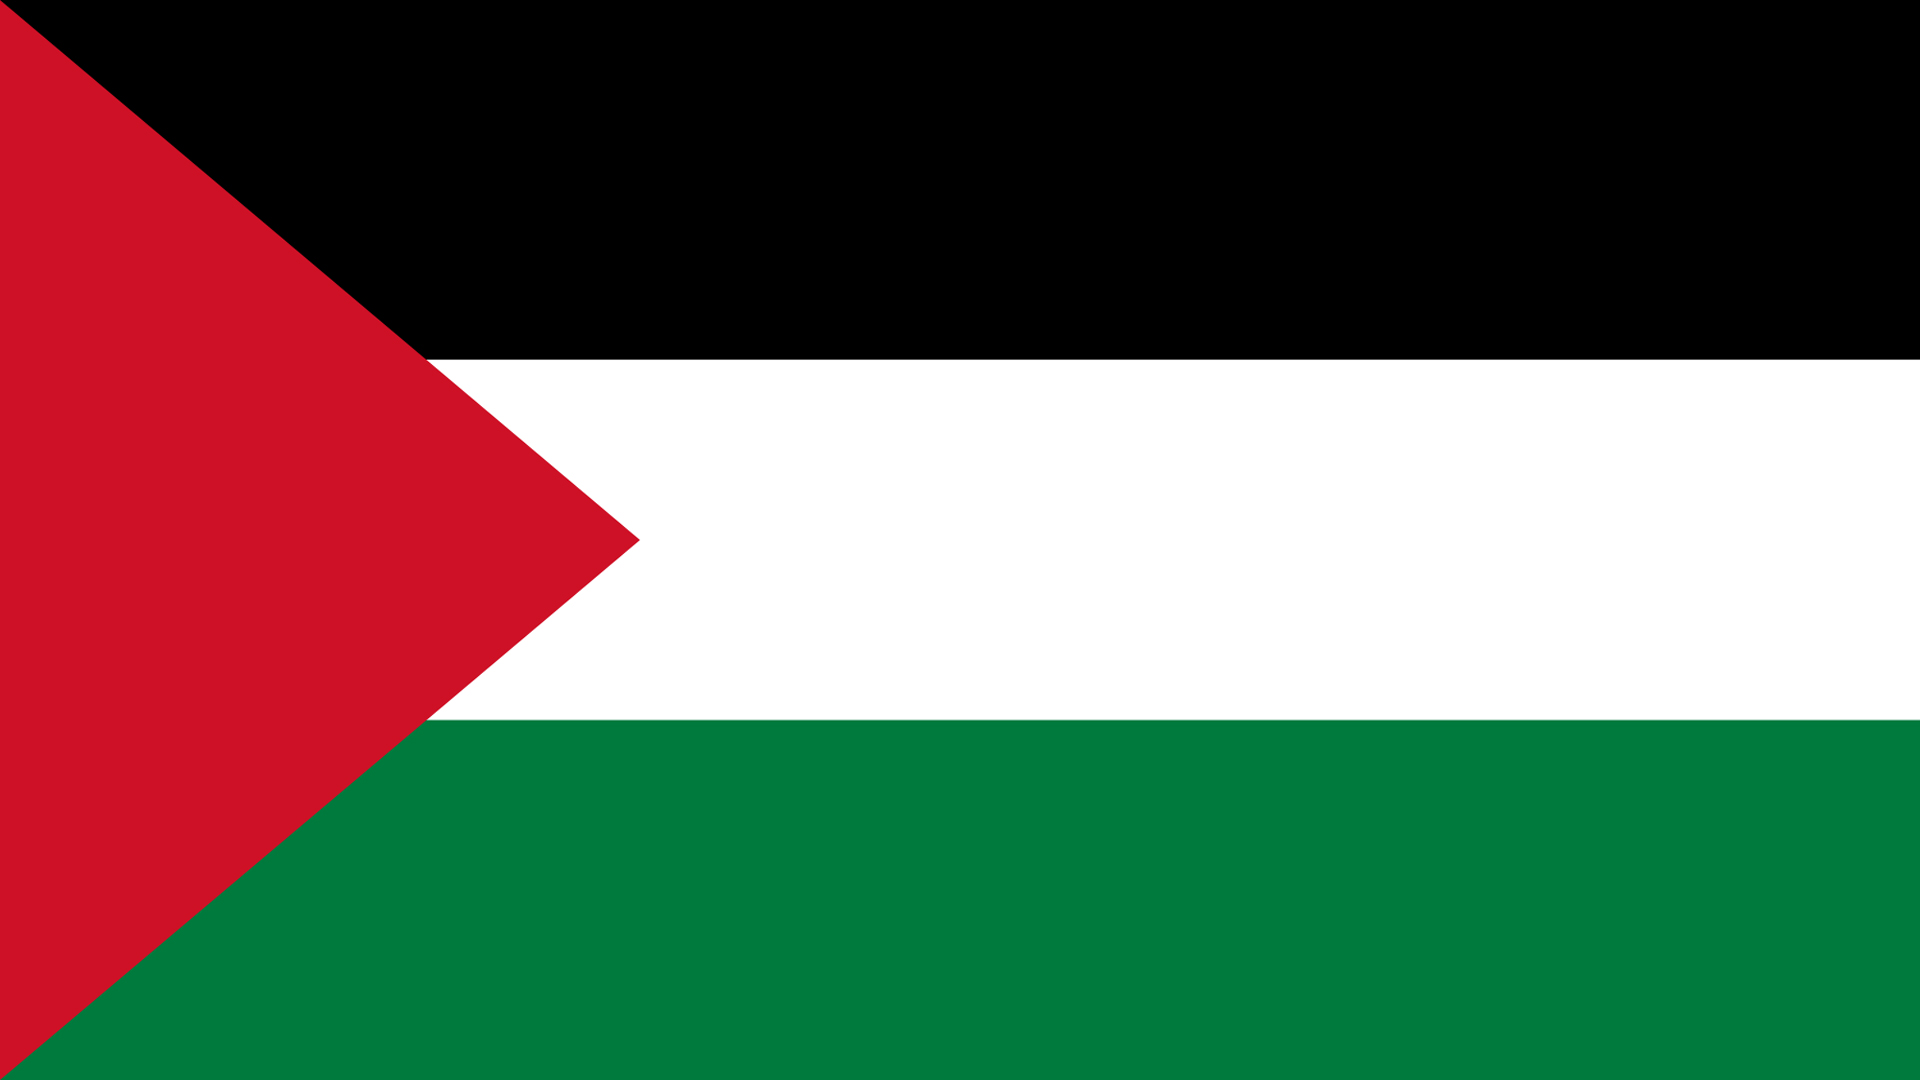 Palestine Flag Wallpaper High Definition Quality